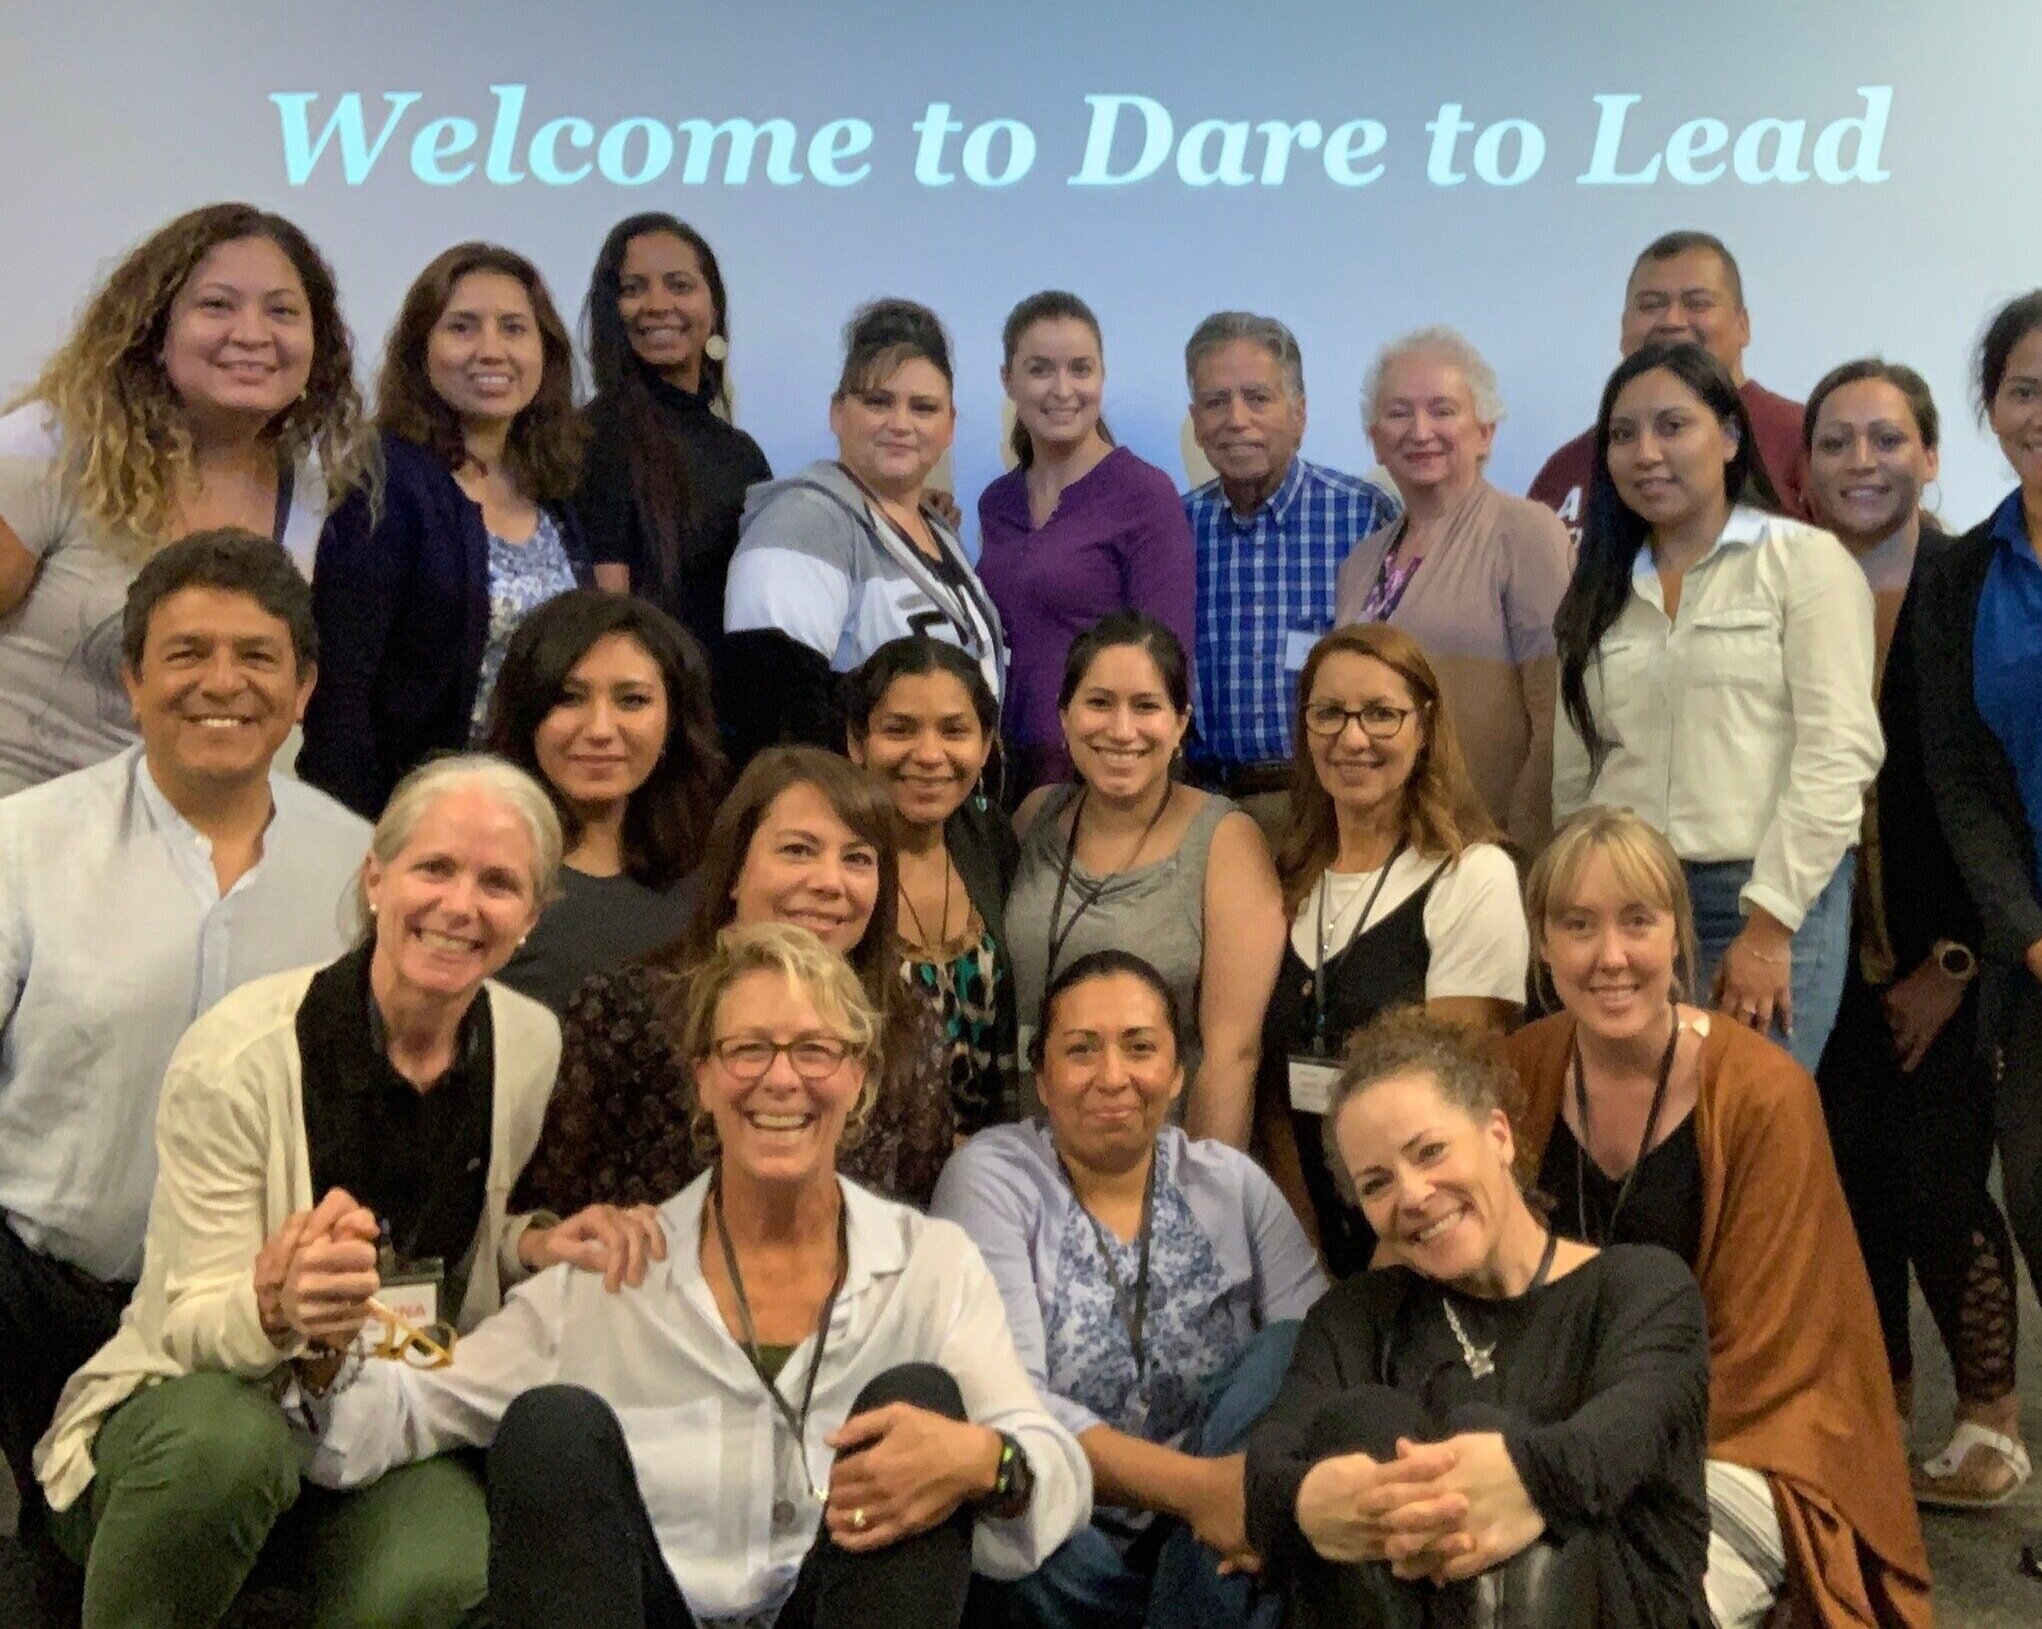 Ruth Williamson Bend Oregon, Latino Leadership retreat, Dare to Lead workshop Brene Brown